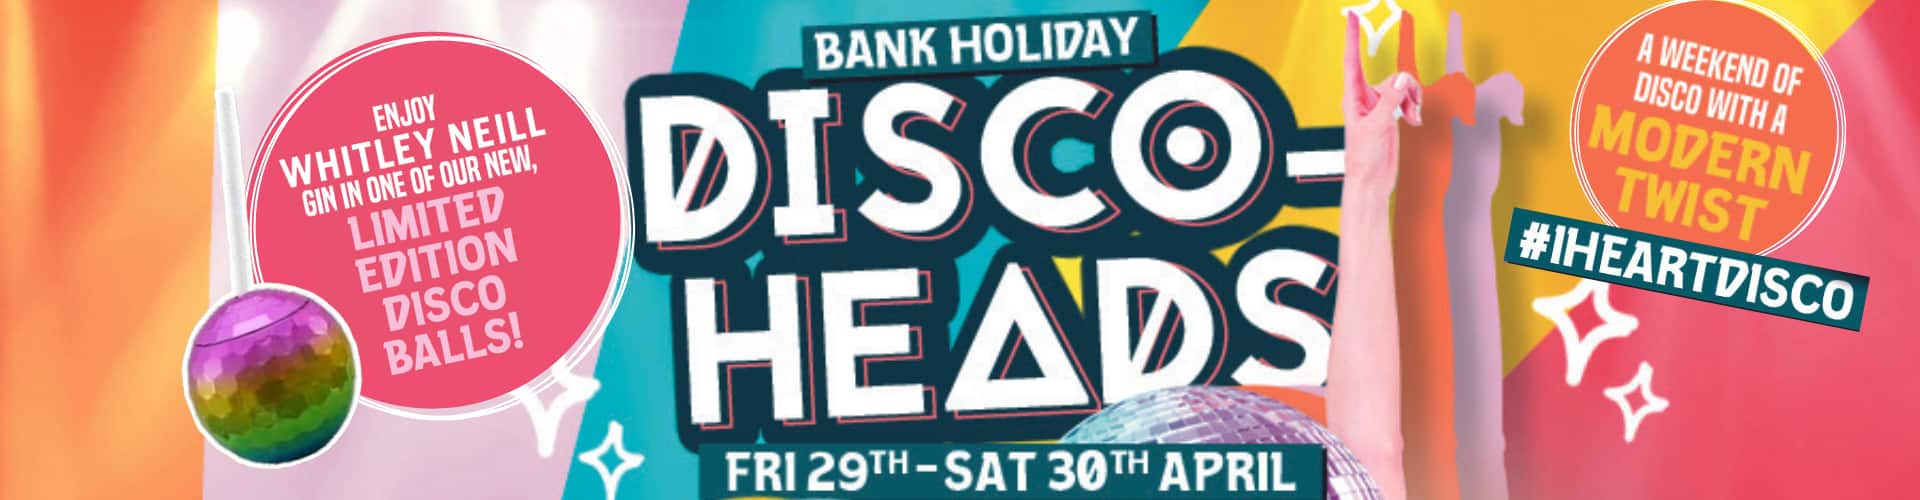 Bank Holiday Disco Heads